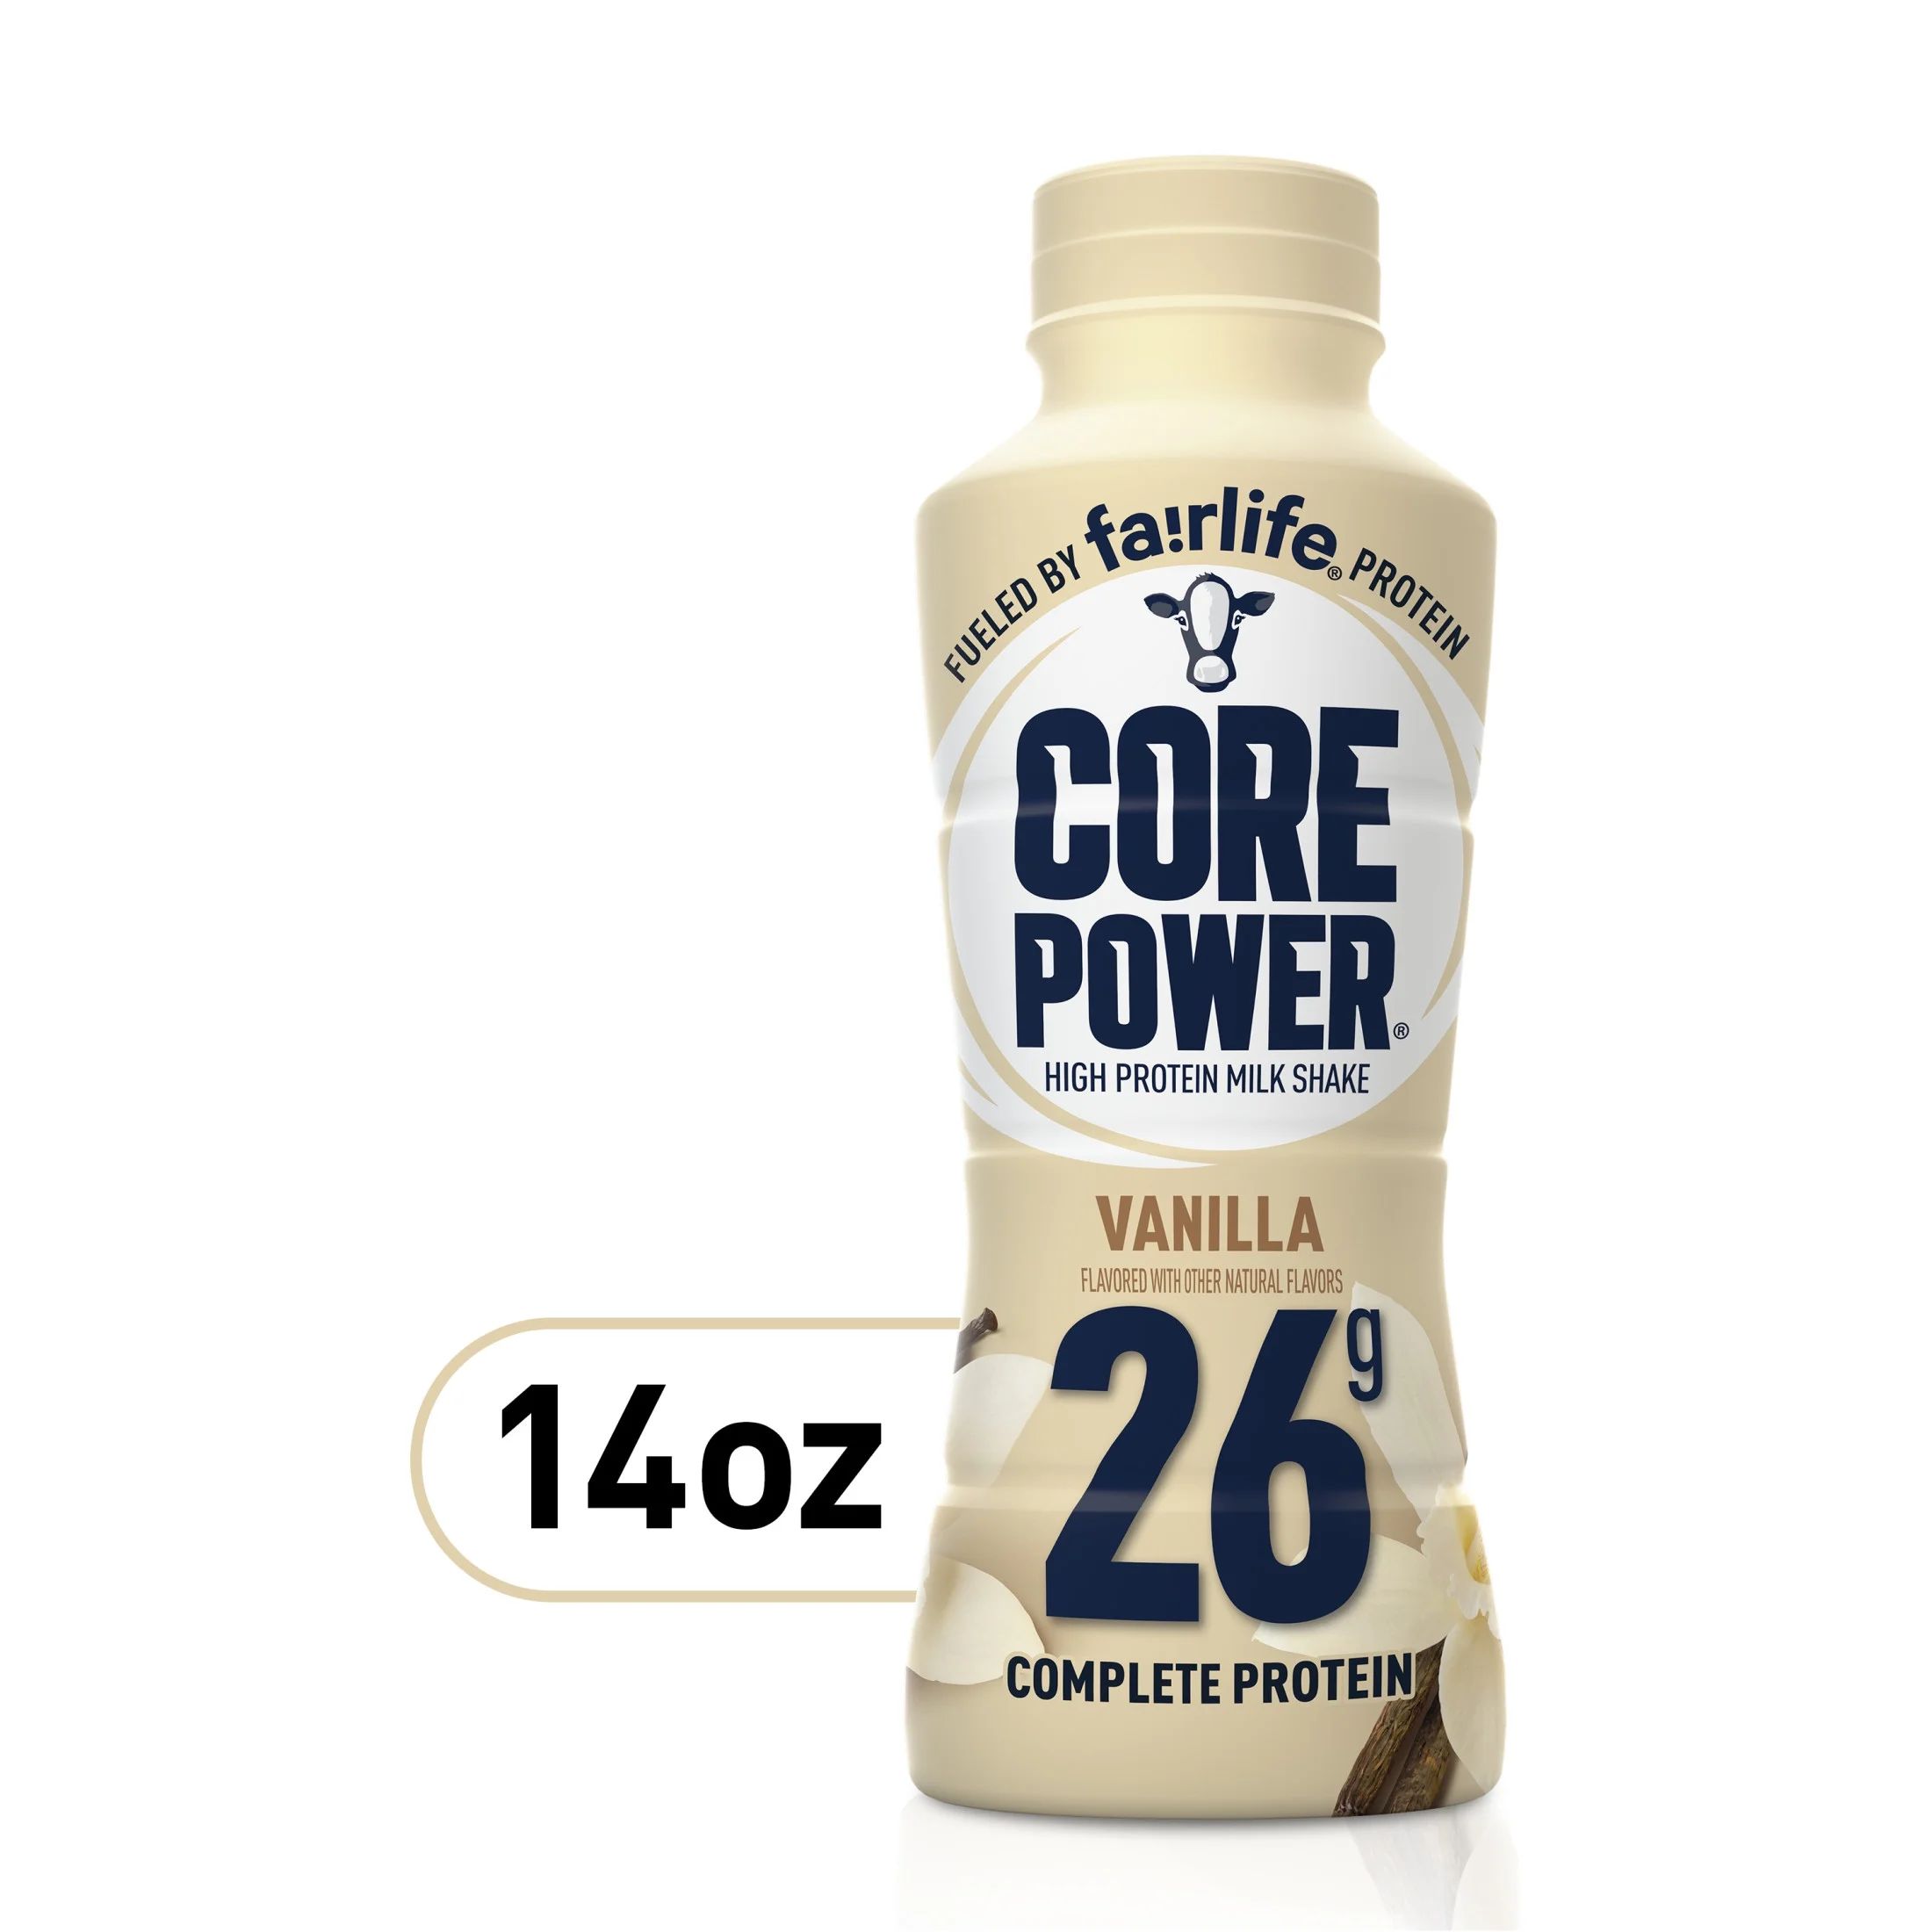 Core Power Protein Shake with 26g Protein by fairlife Milk, Vanilla, 14 fl oz | Walmart (US)